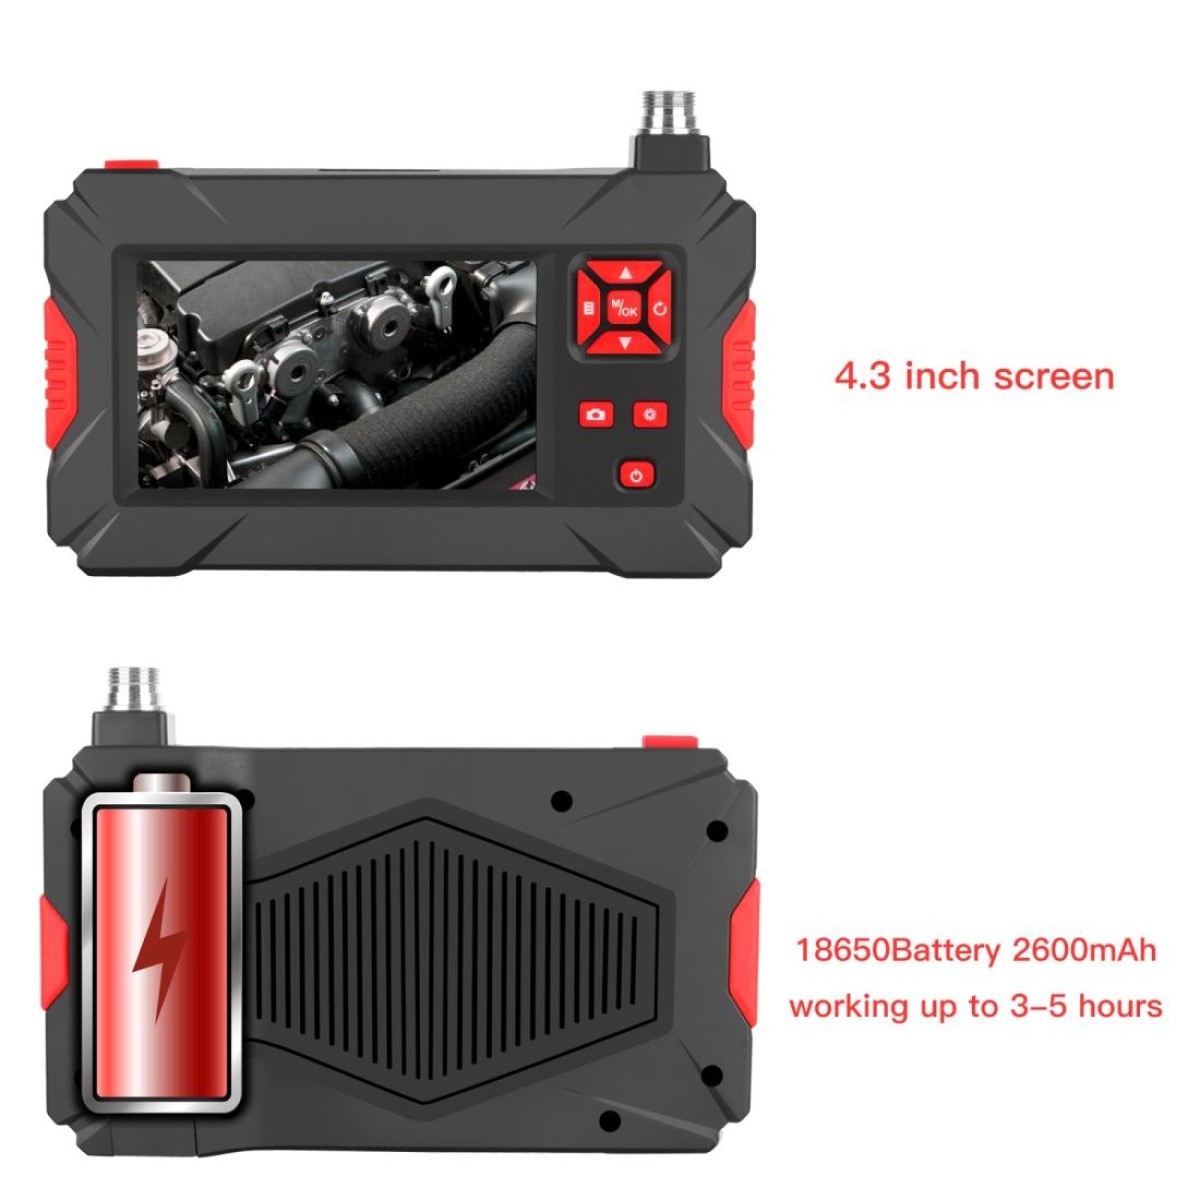 P30 8mm 1080P IP68 Waterproof 4.3 inch Screen Dual Camera Digital Endoscope, Length:5m Hard Cable(Black)